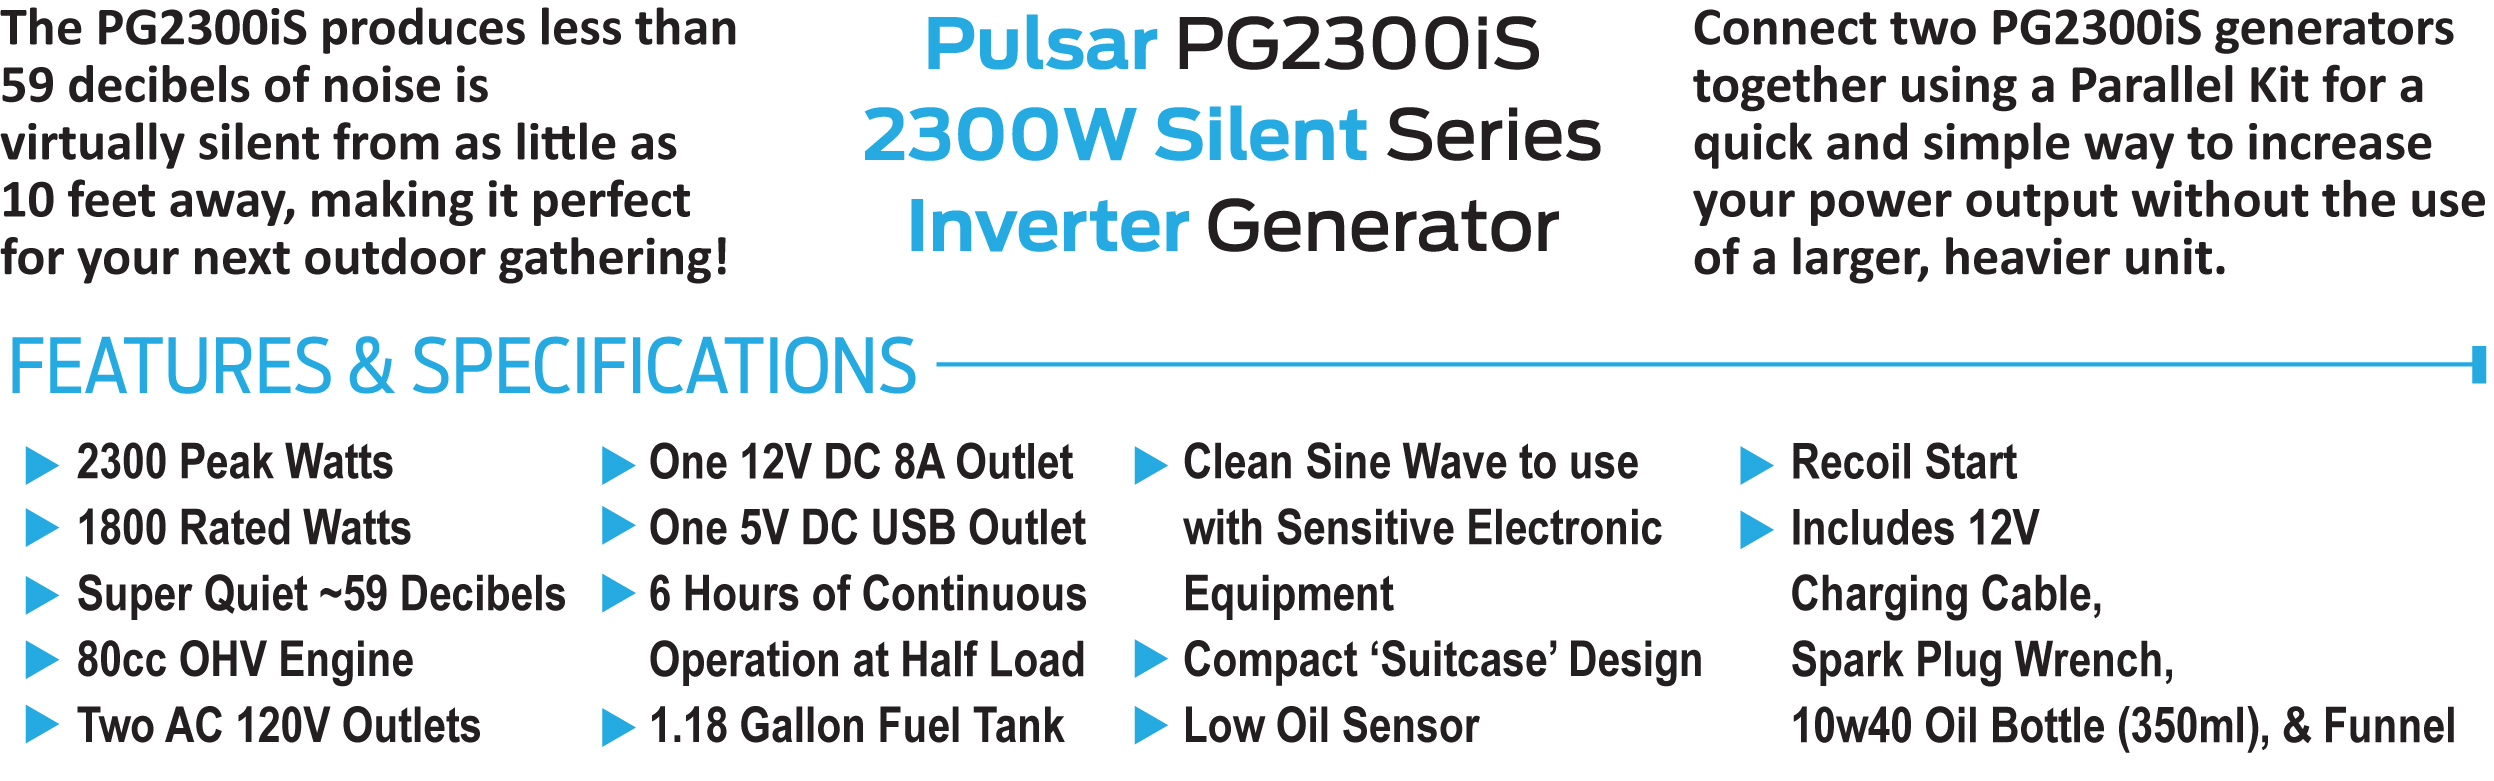 PG2300IS  Pulsar Power Equipment